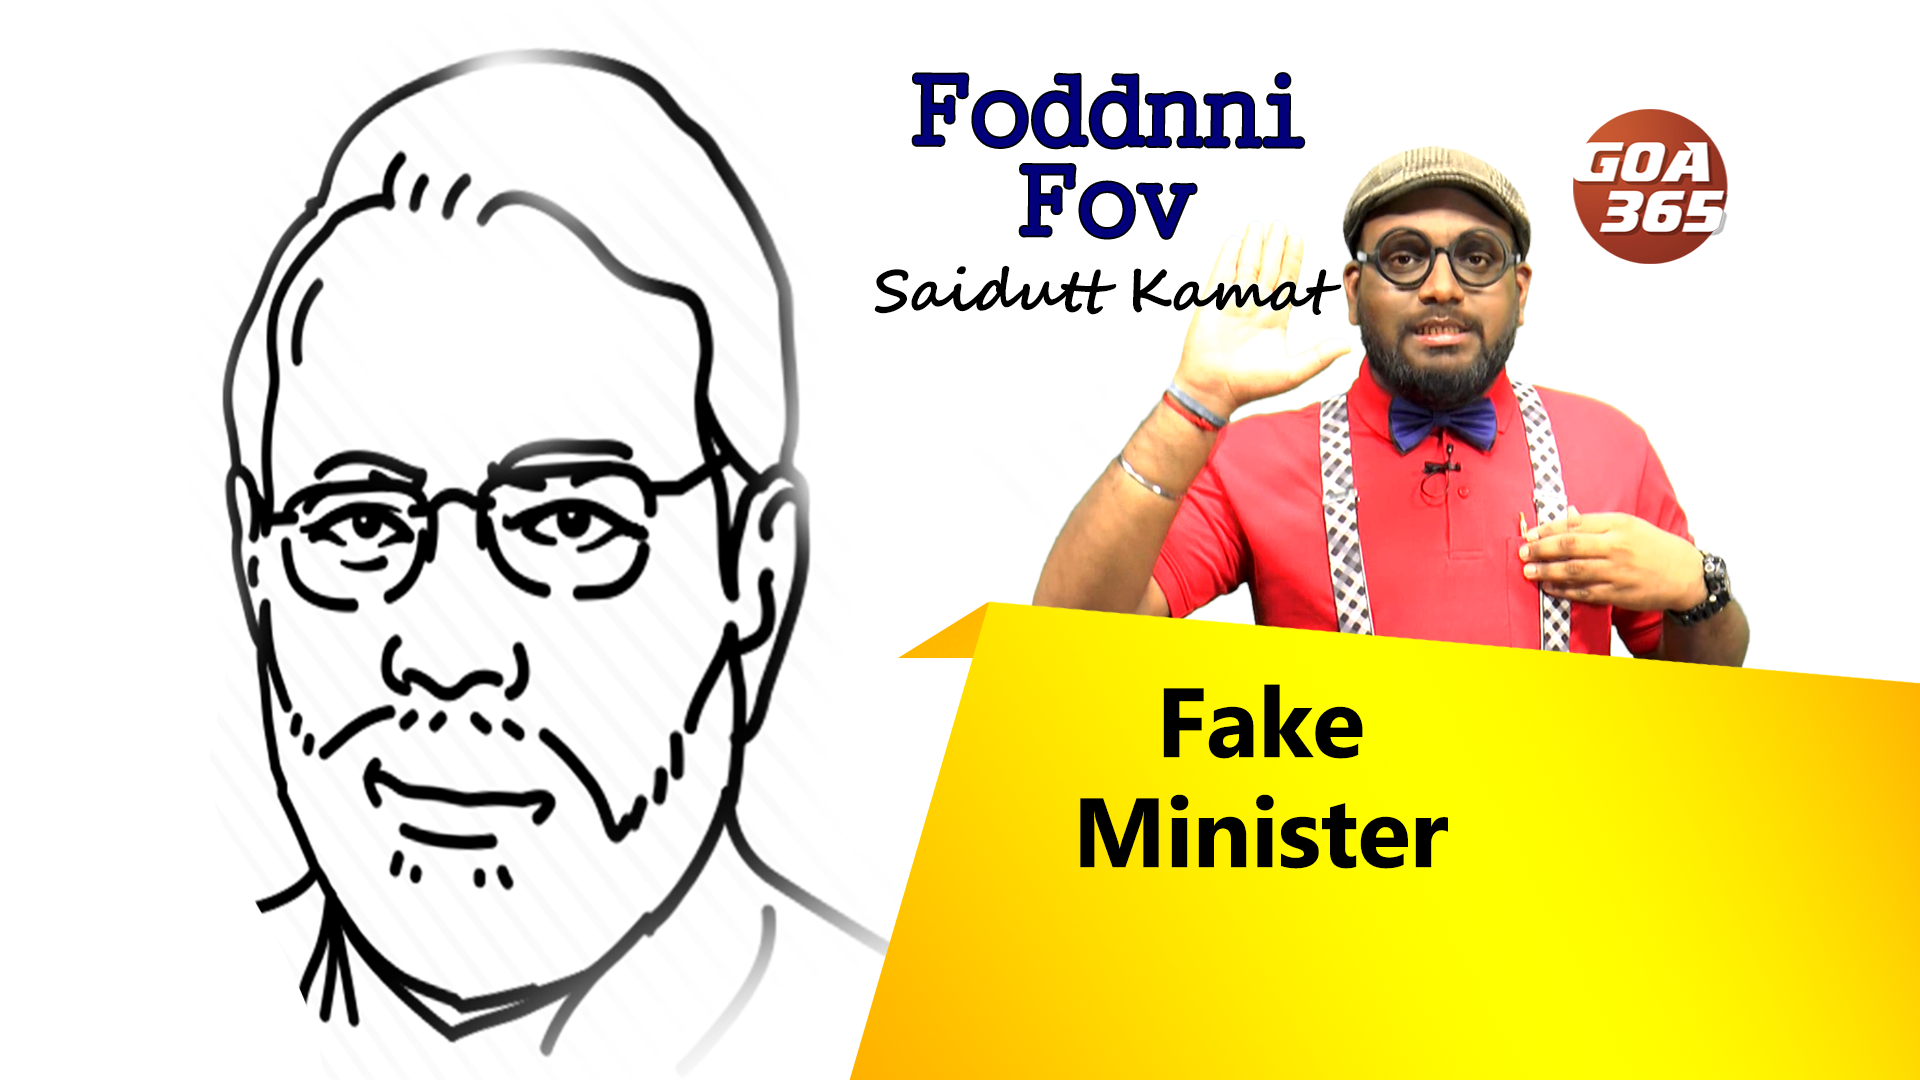 FODDNNI FOV : Fake Minister